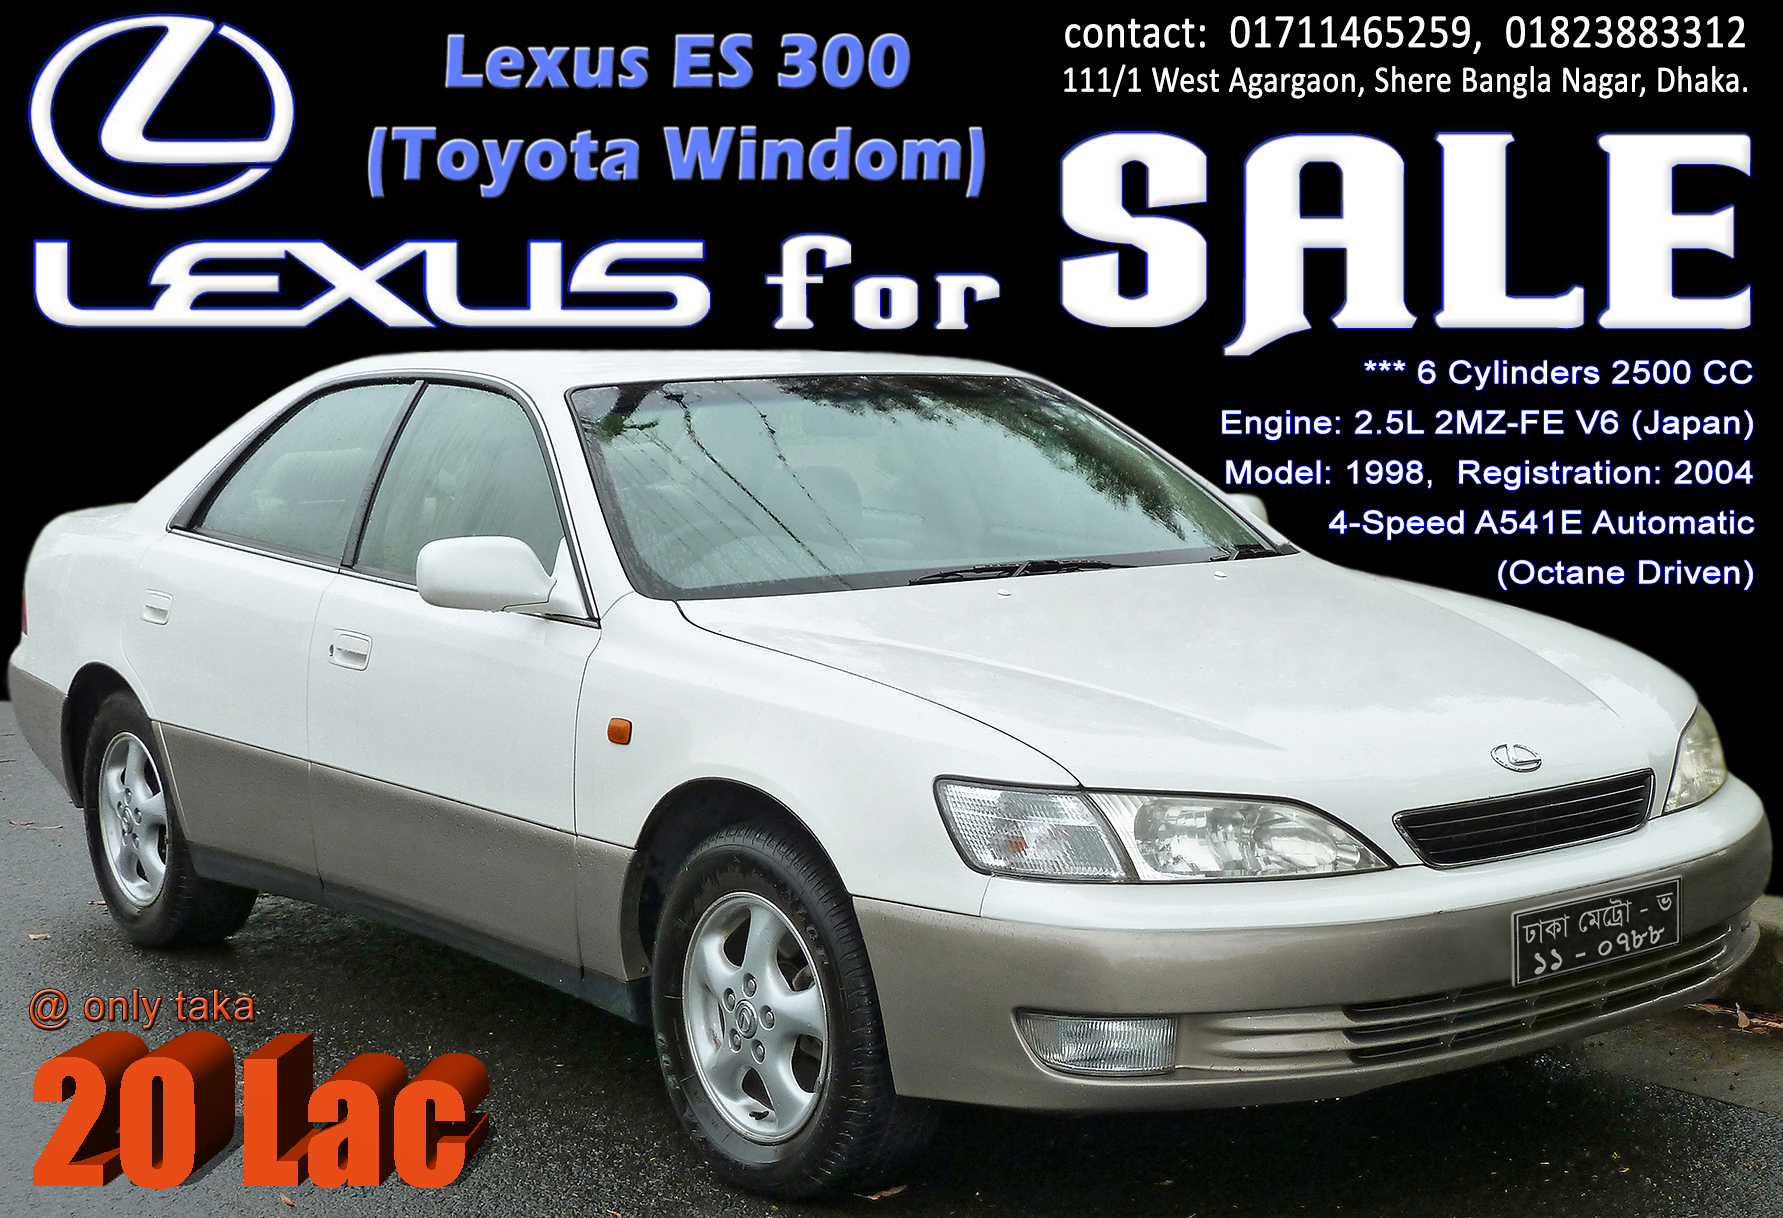 Lexus ES 300 Toyota Windom for SALE large image 0